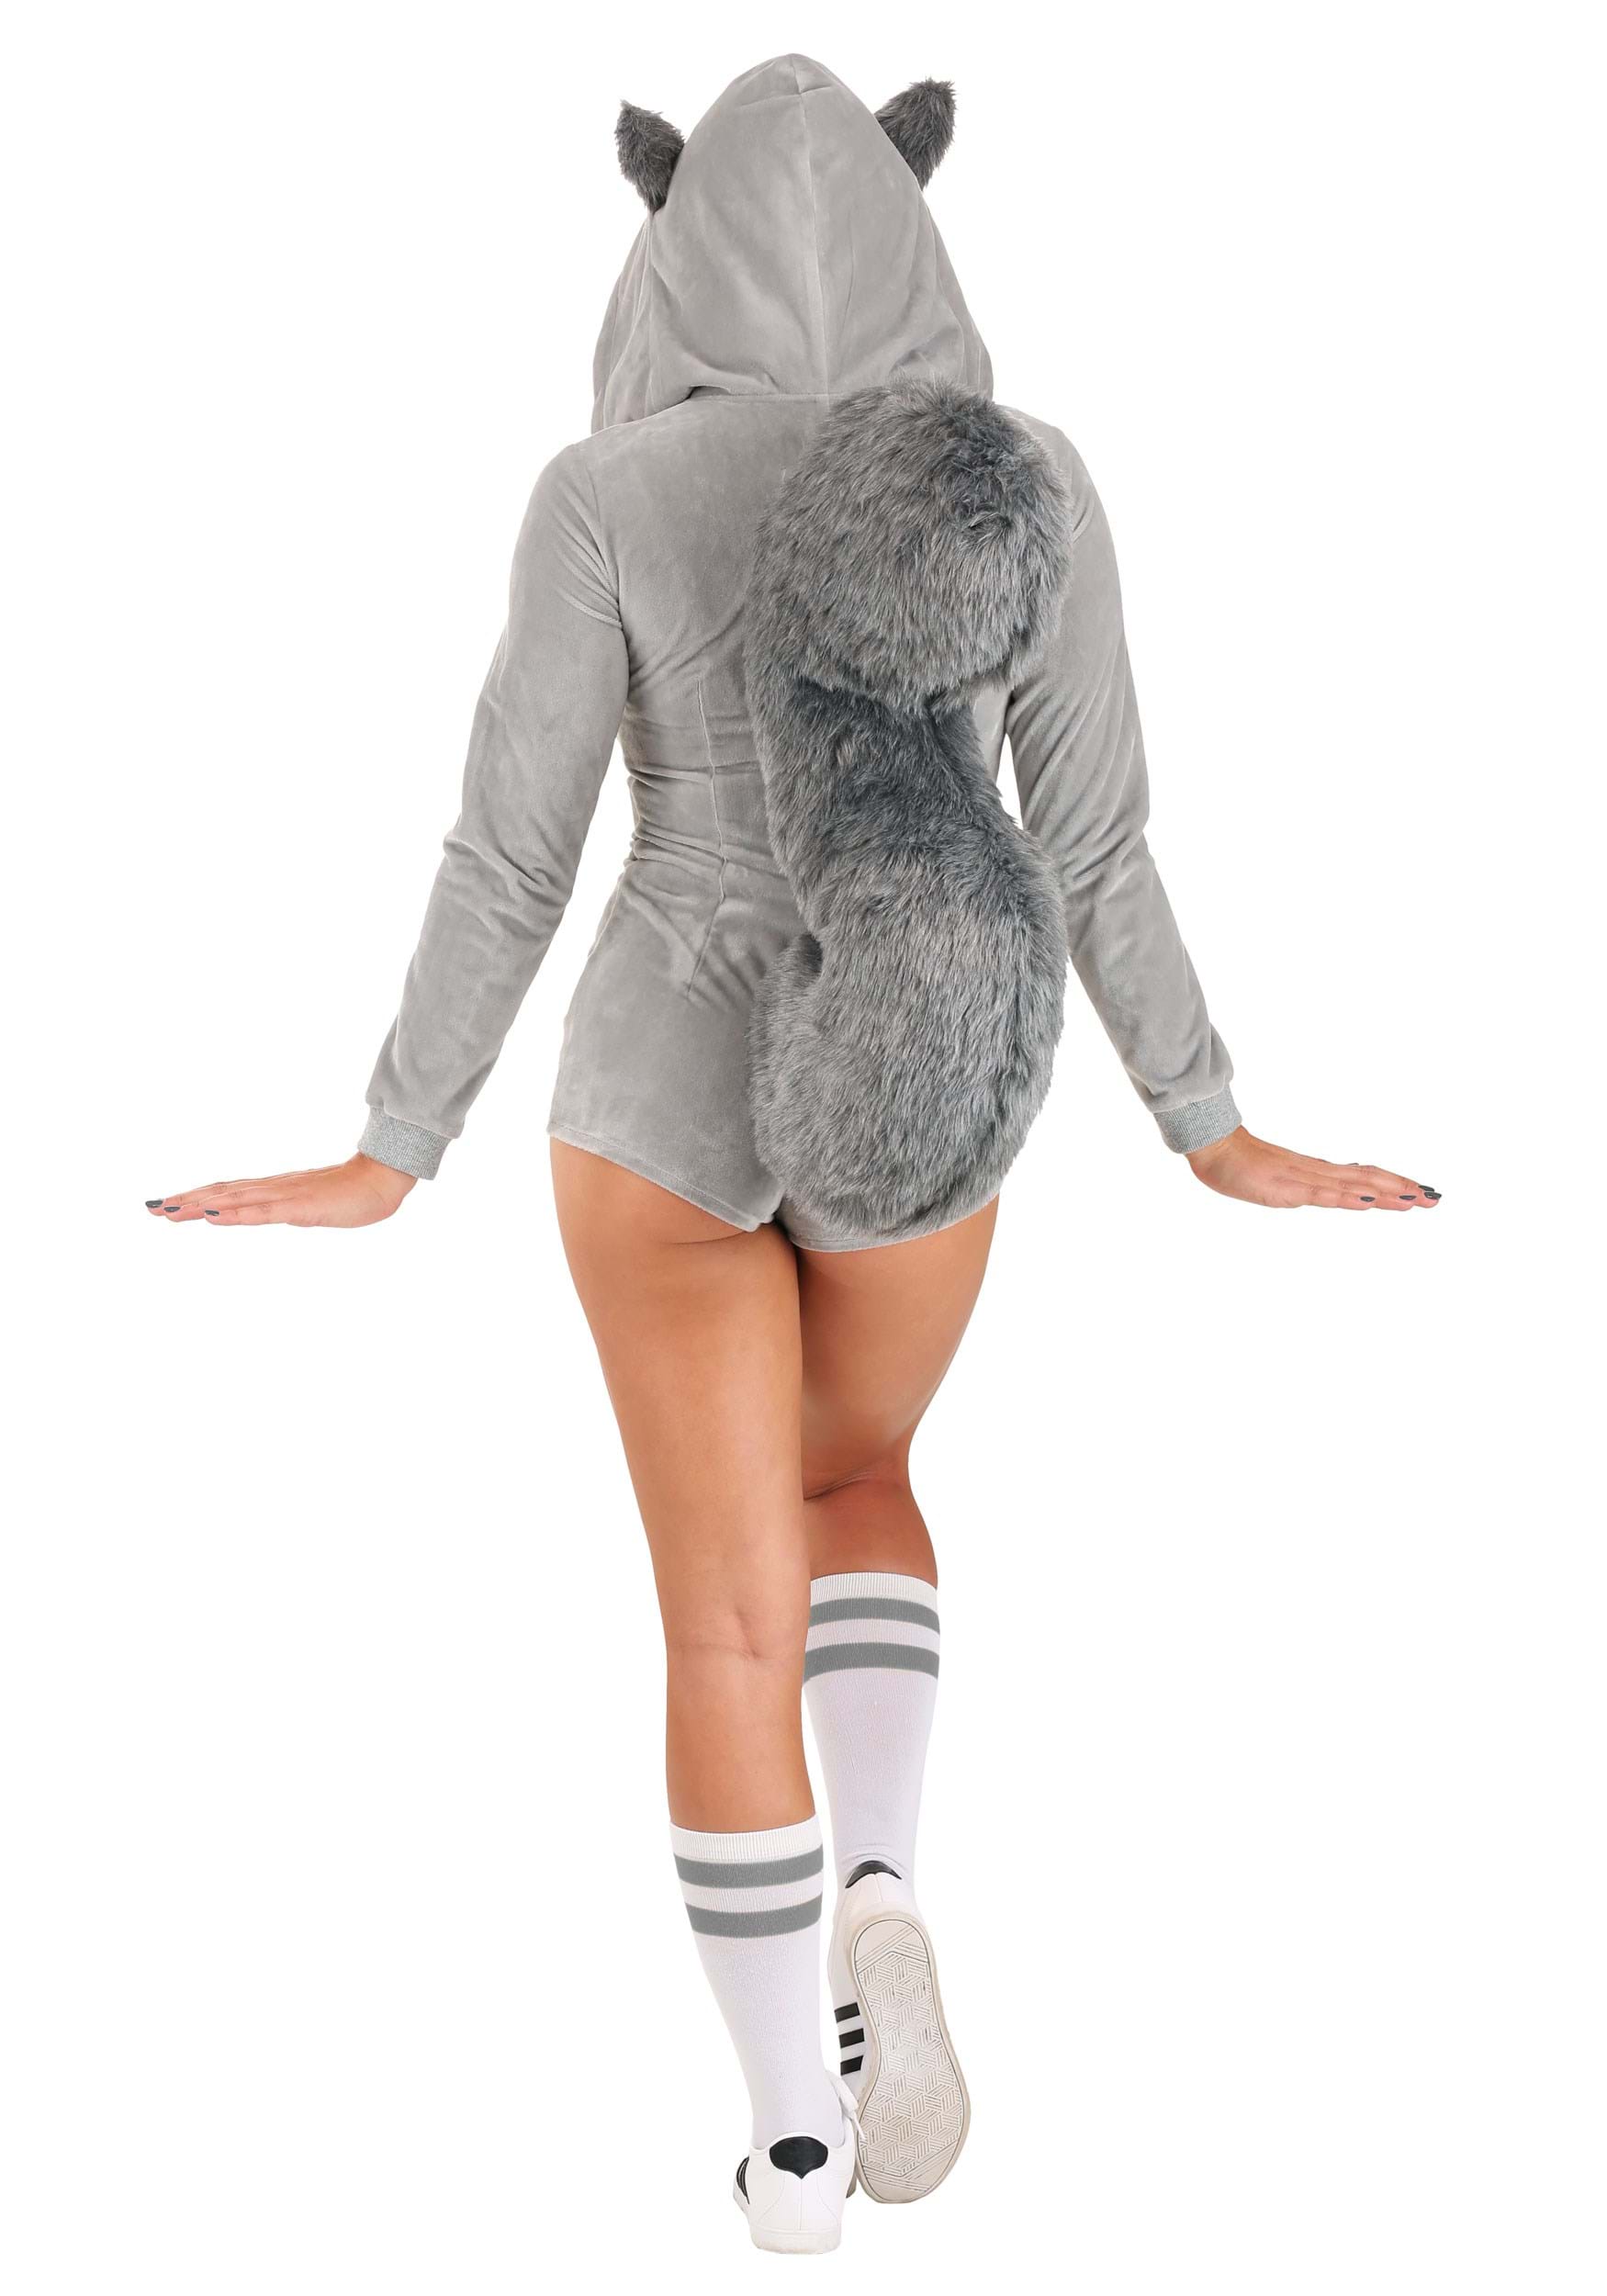 Sassy Squirrel Women's Costume